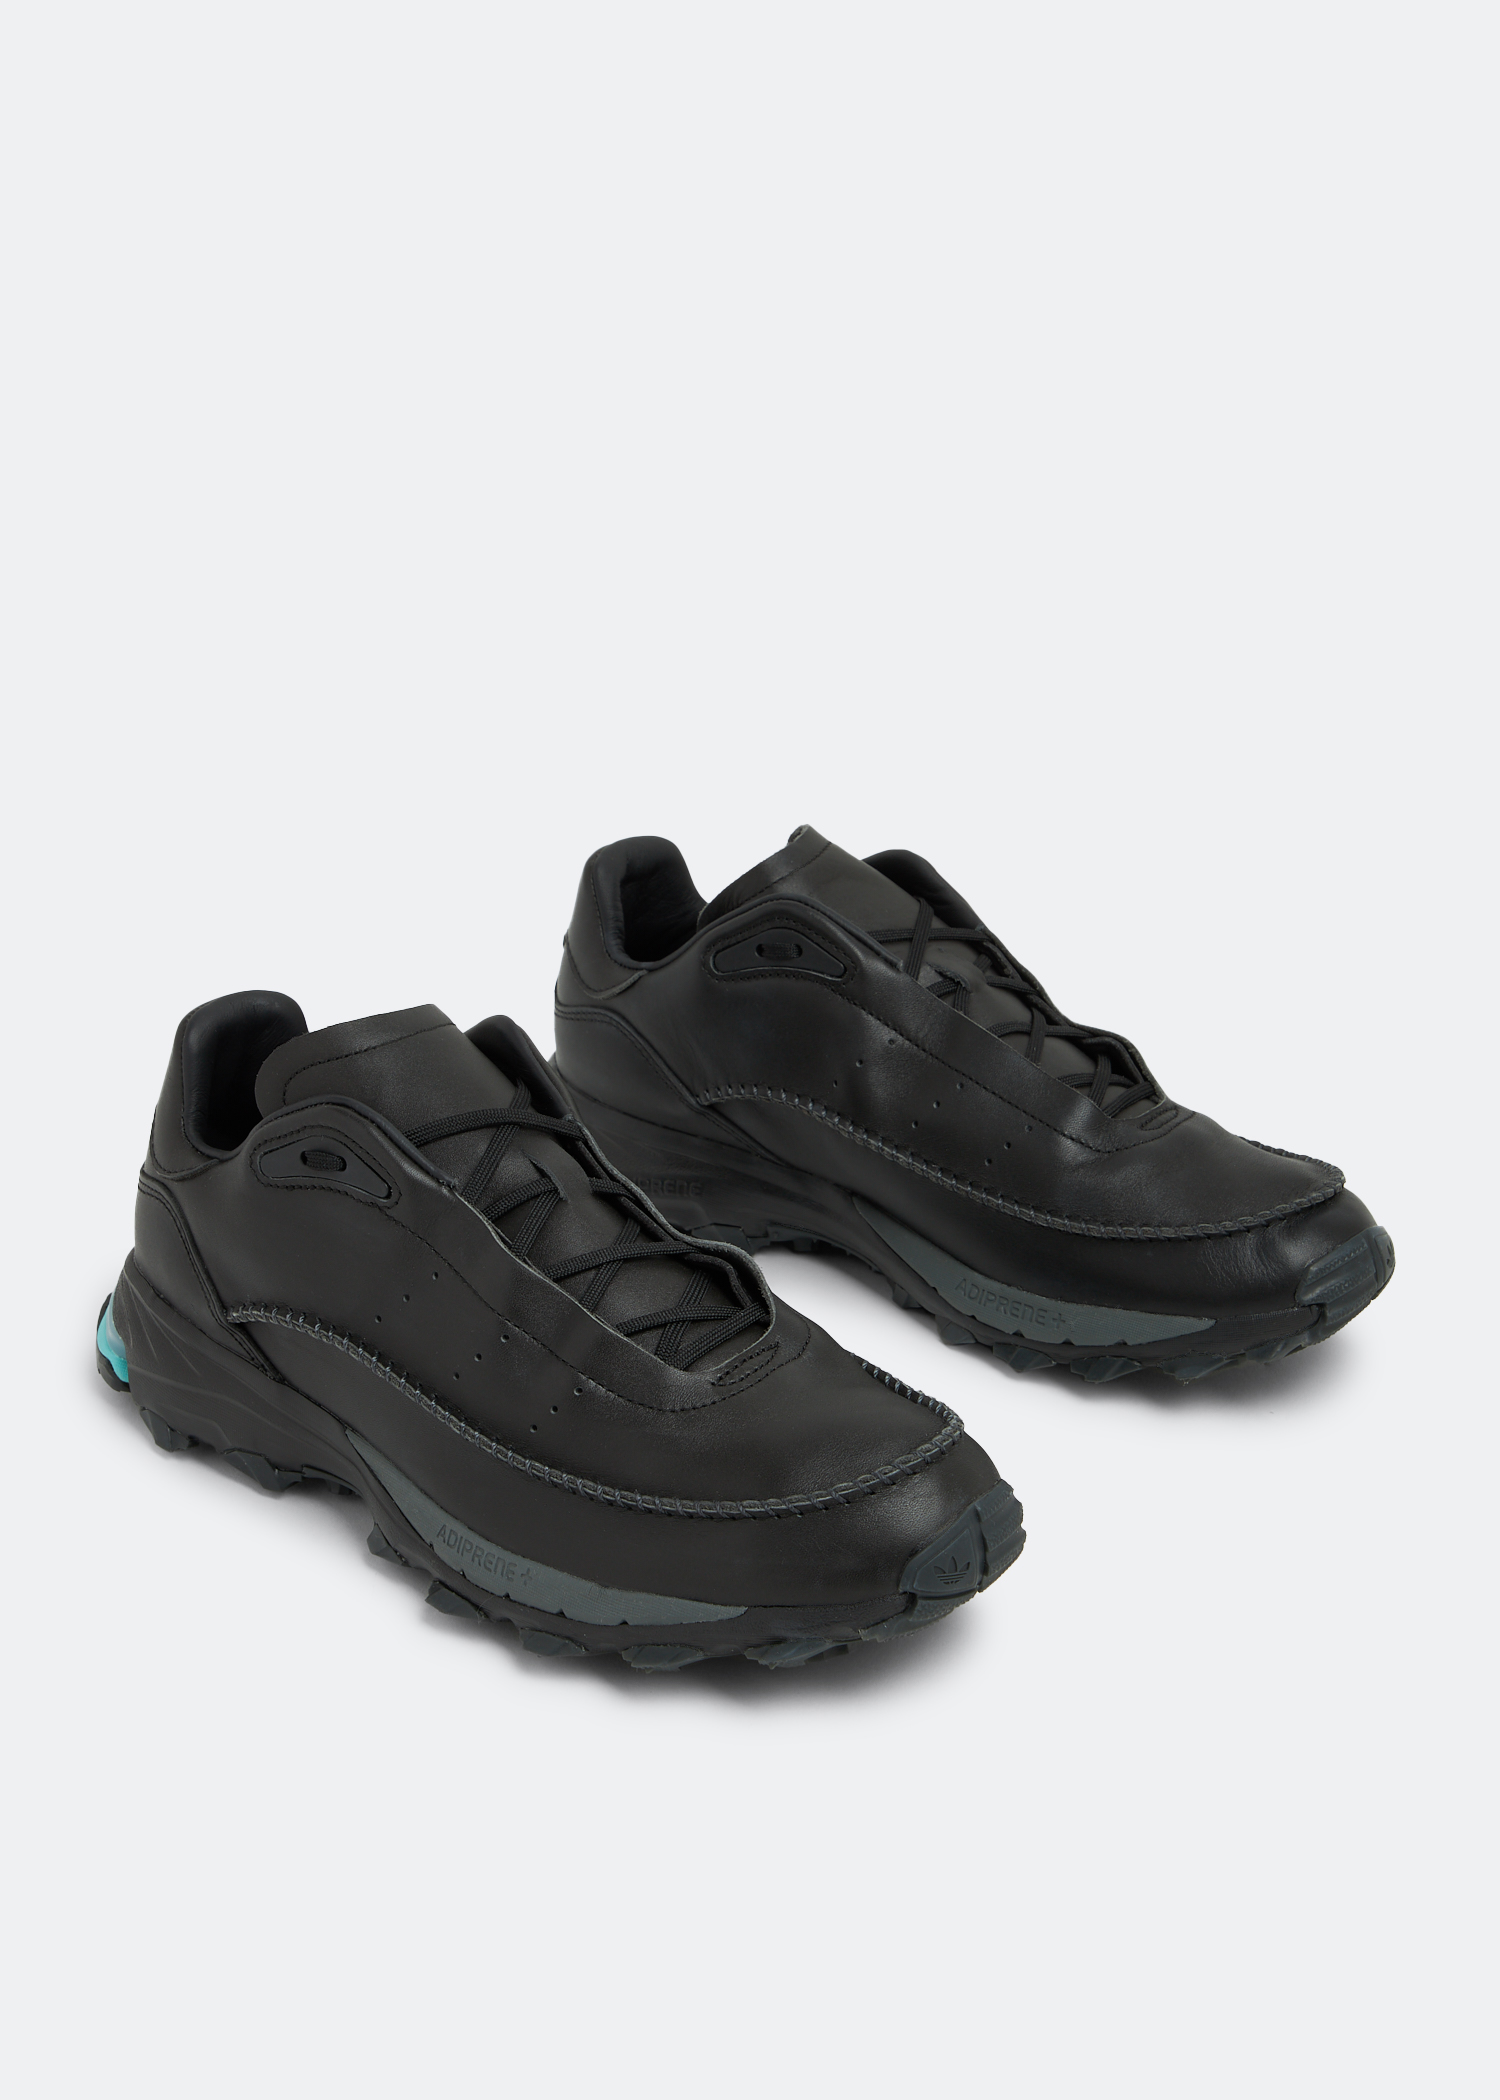 Adidas Mocaturf Adventure sneakers for Men - Black in KSA | Level